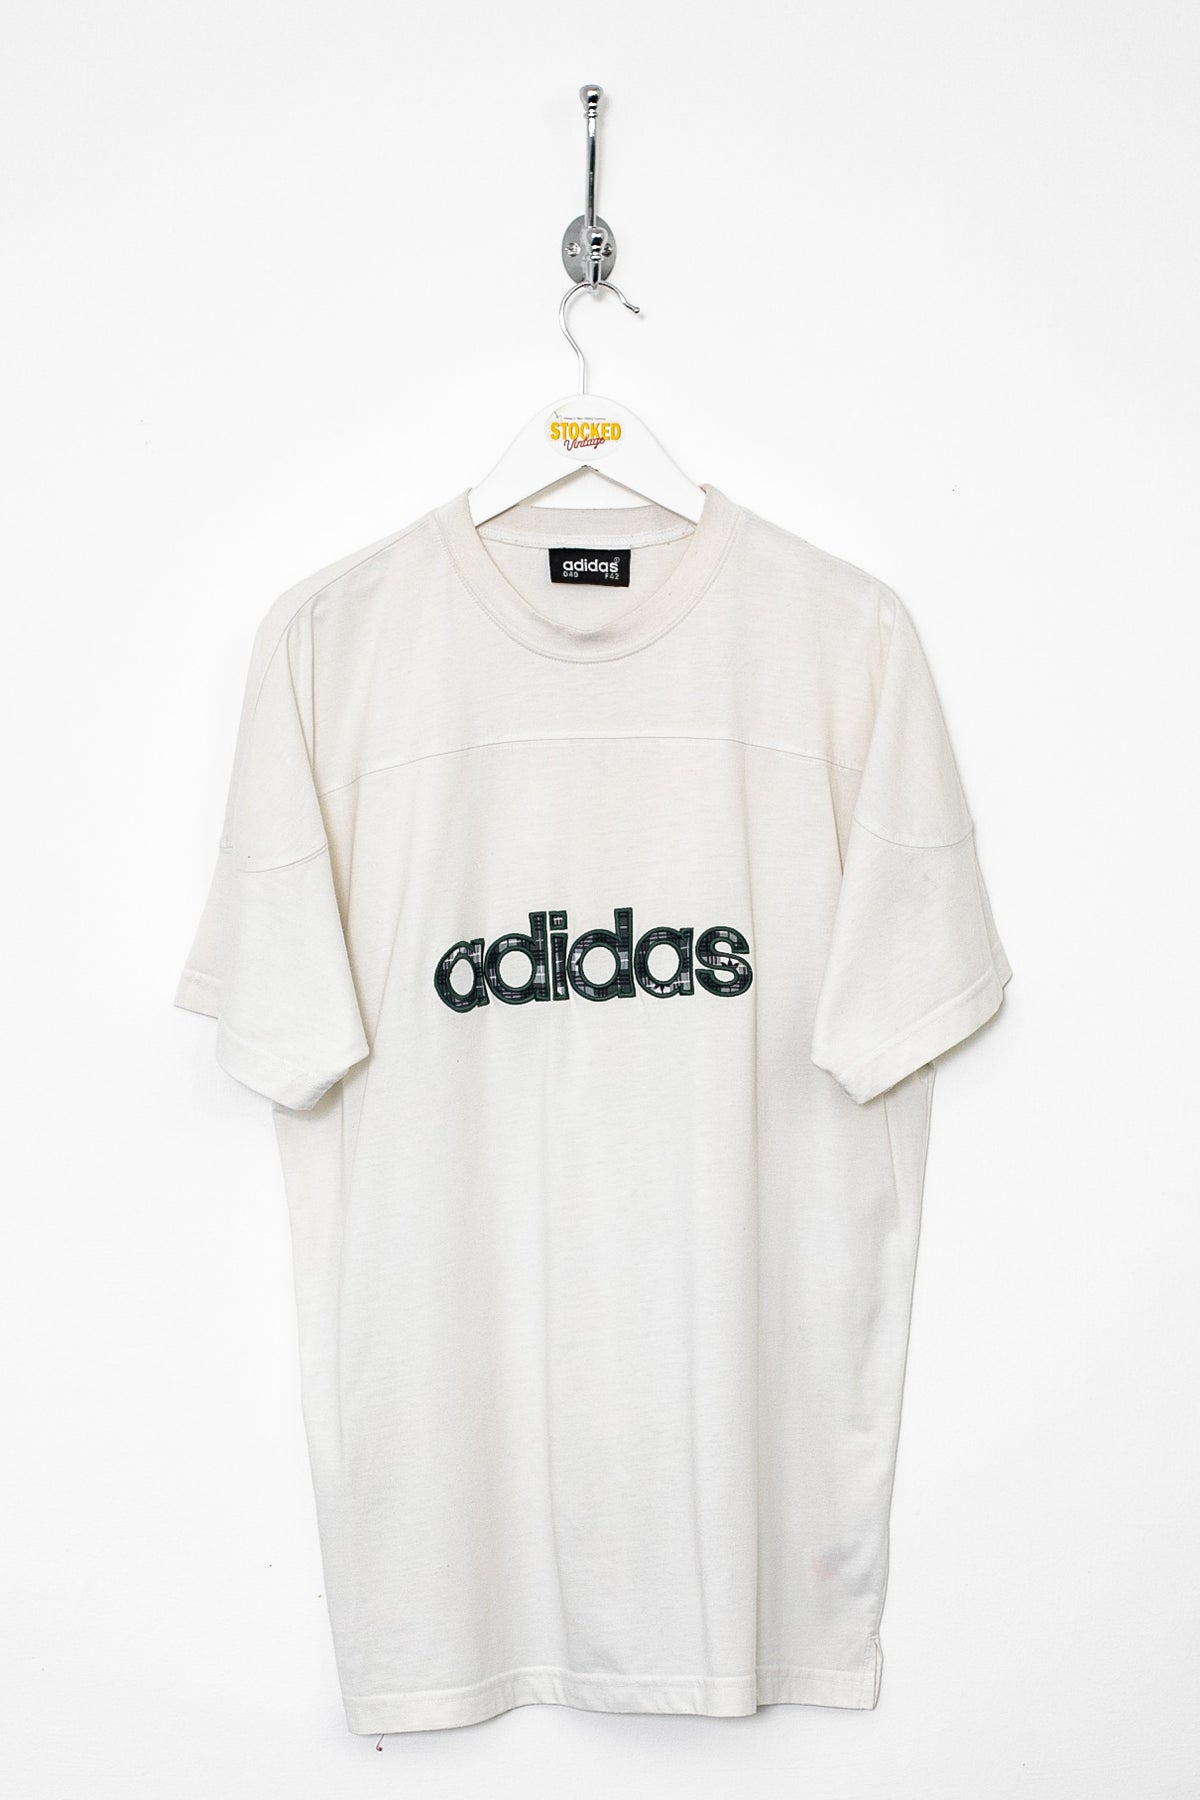 90s Adidas Tee (M)